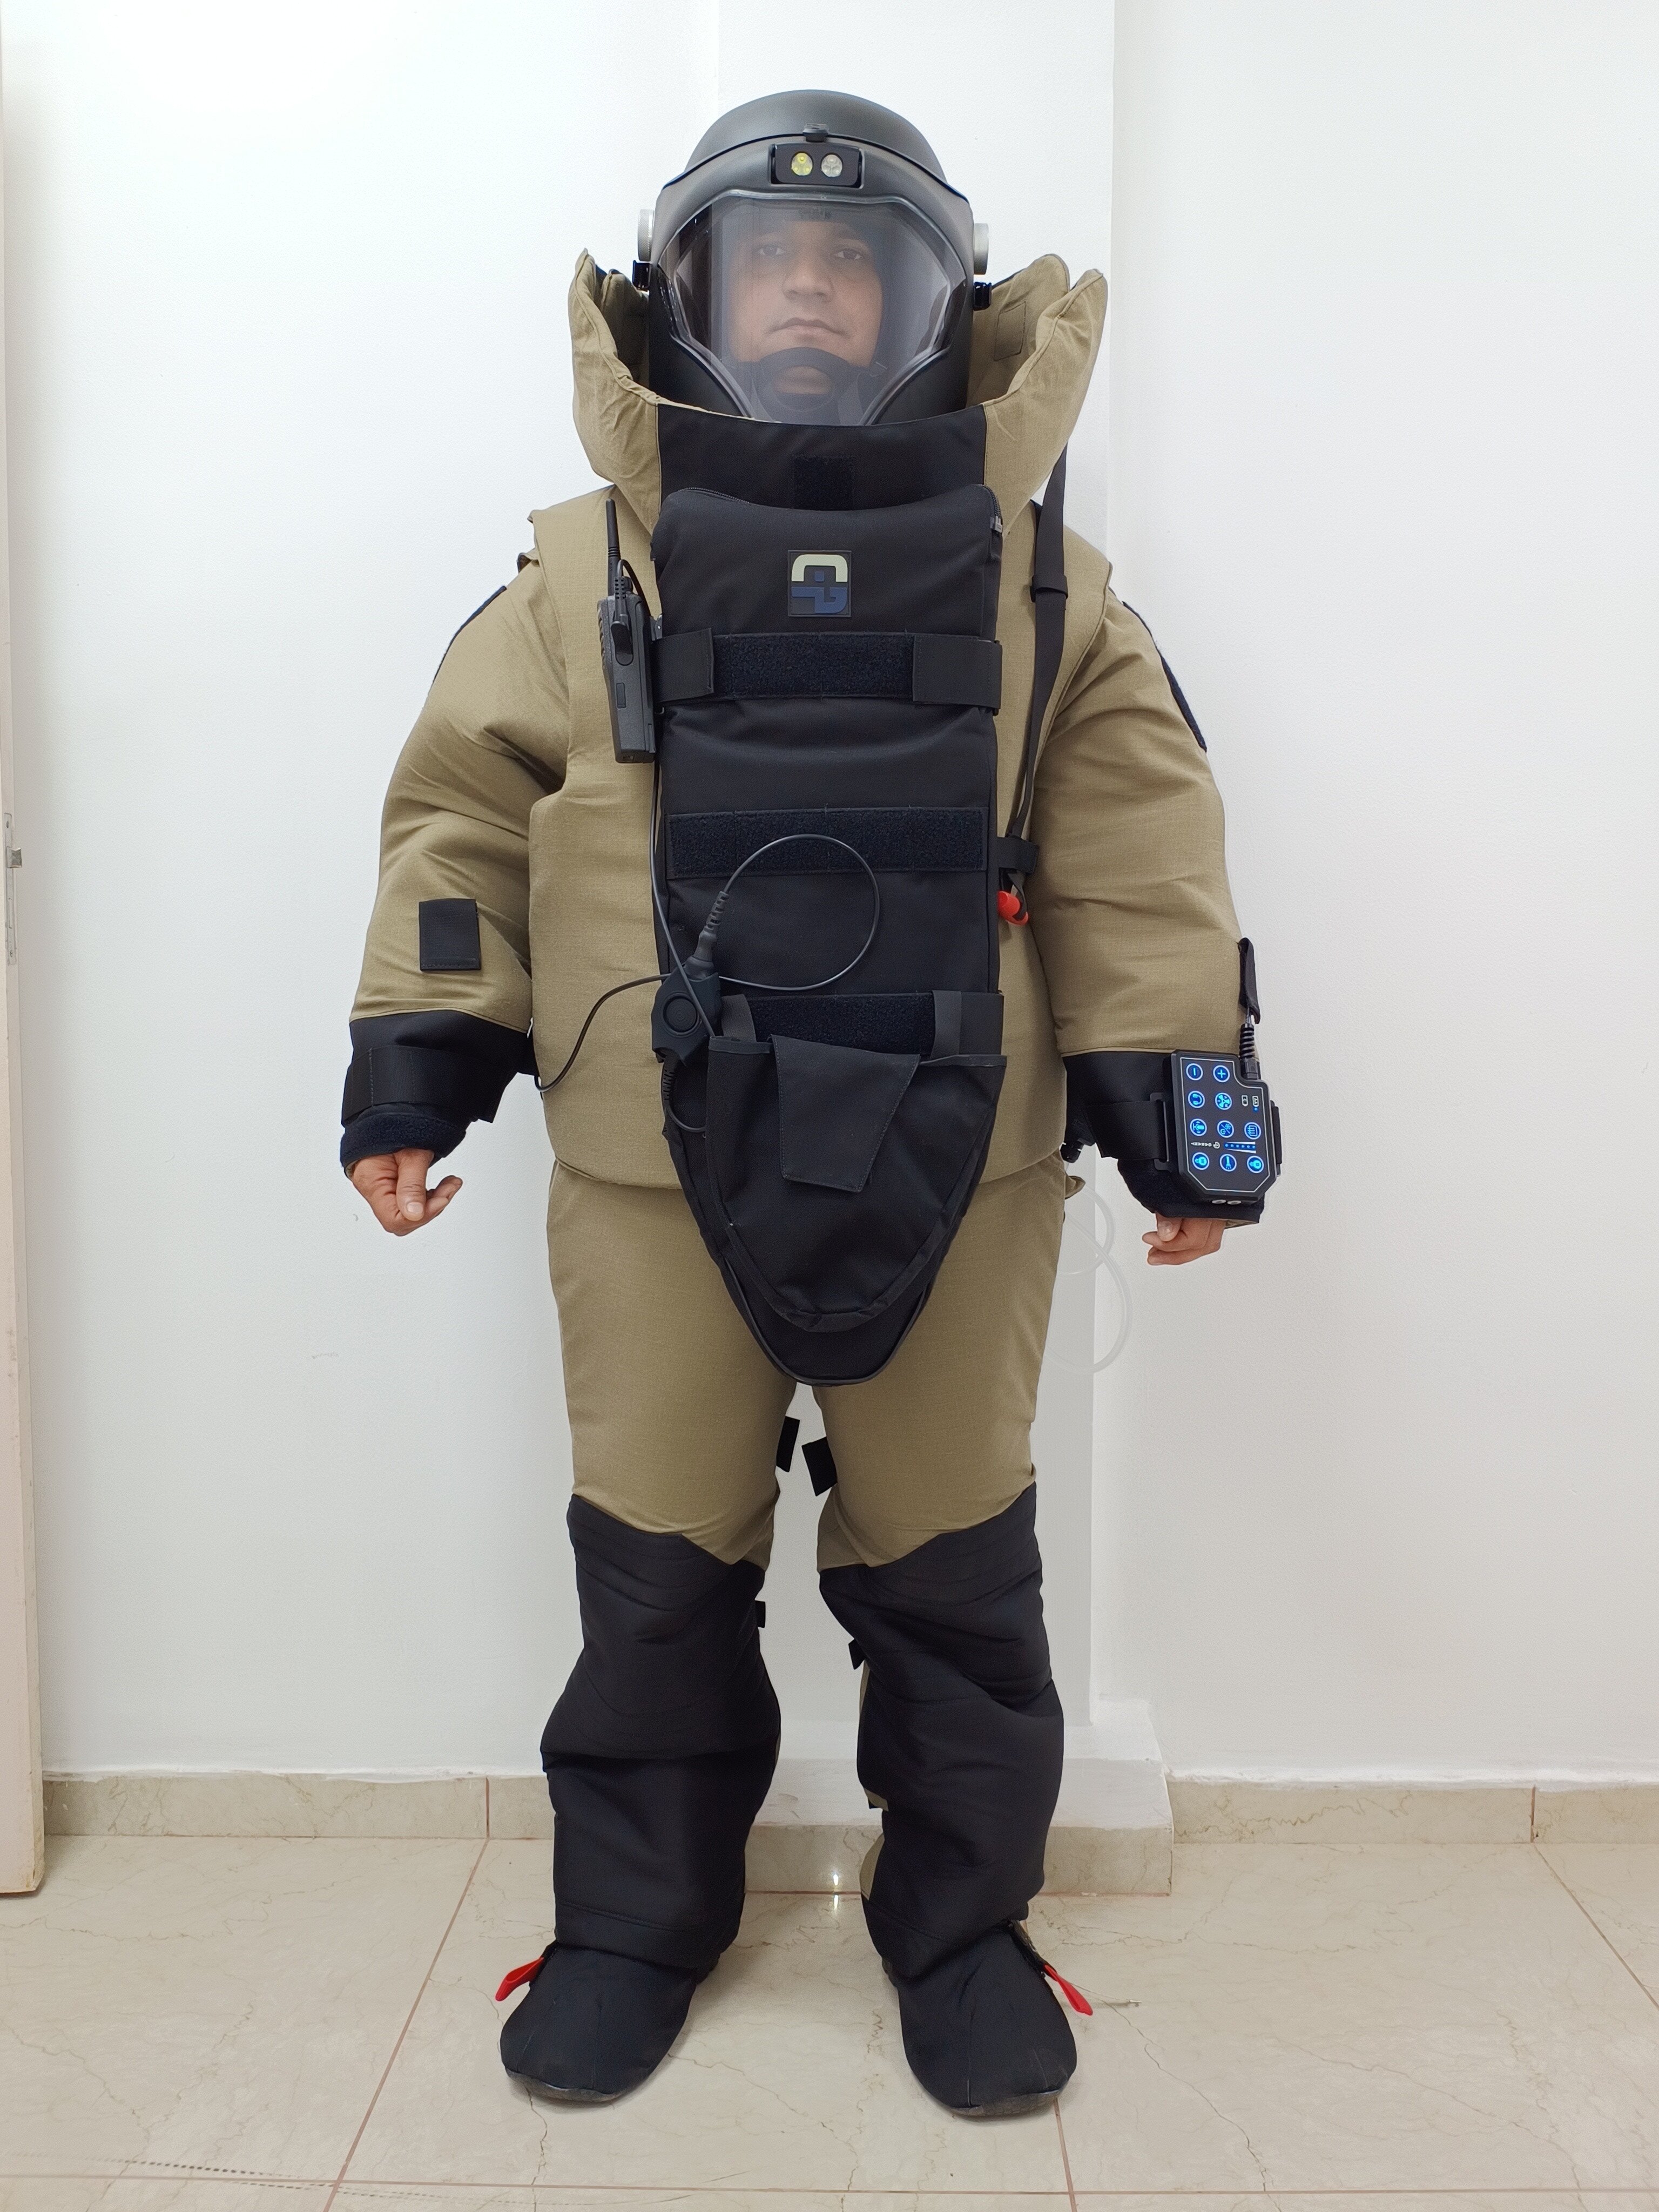 EOD suits bomb suit by Rawslaw on DeviantArt